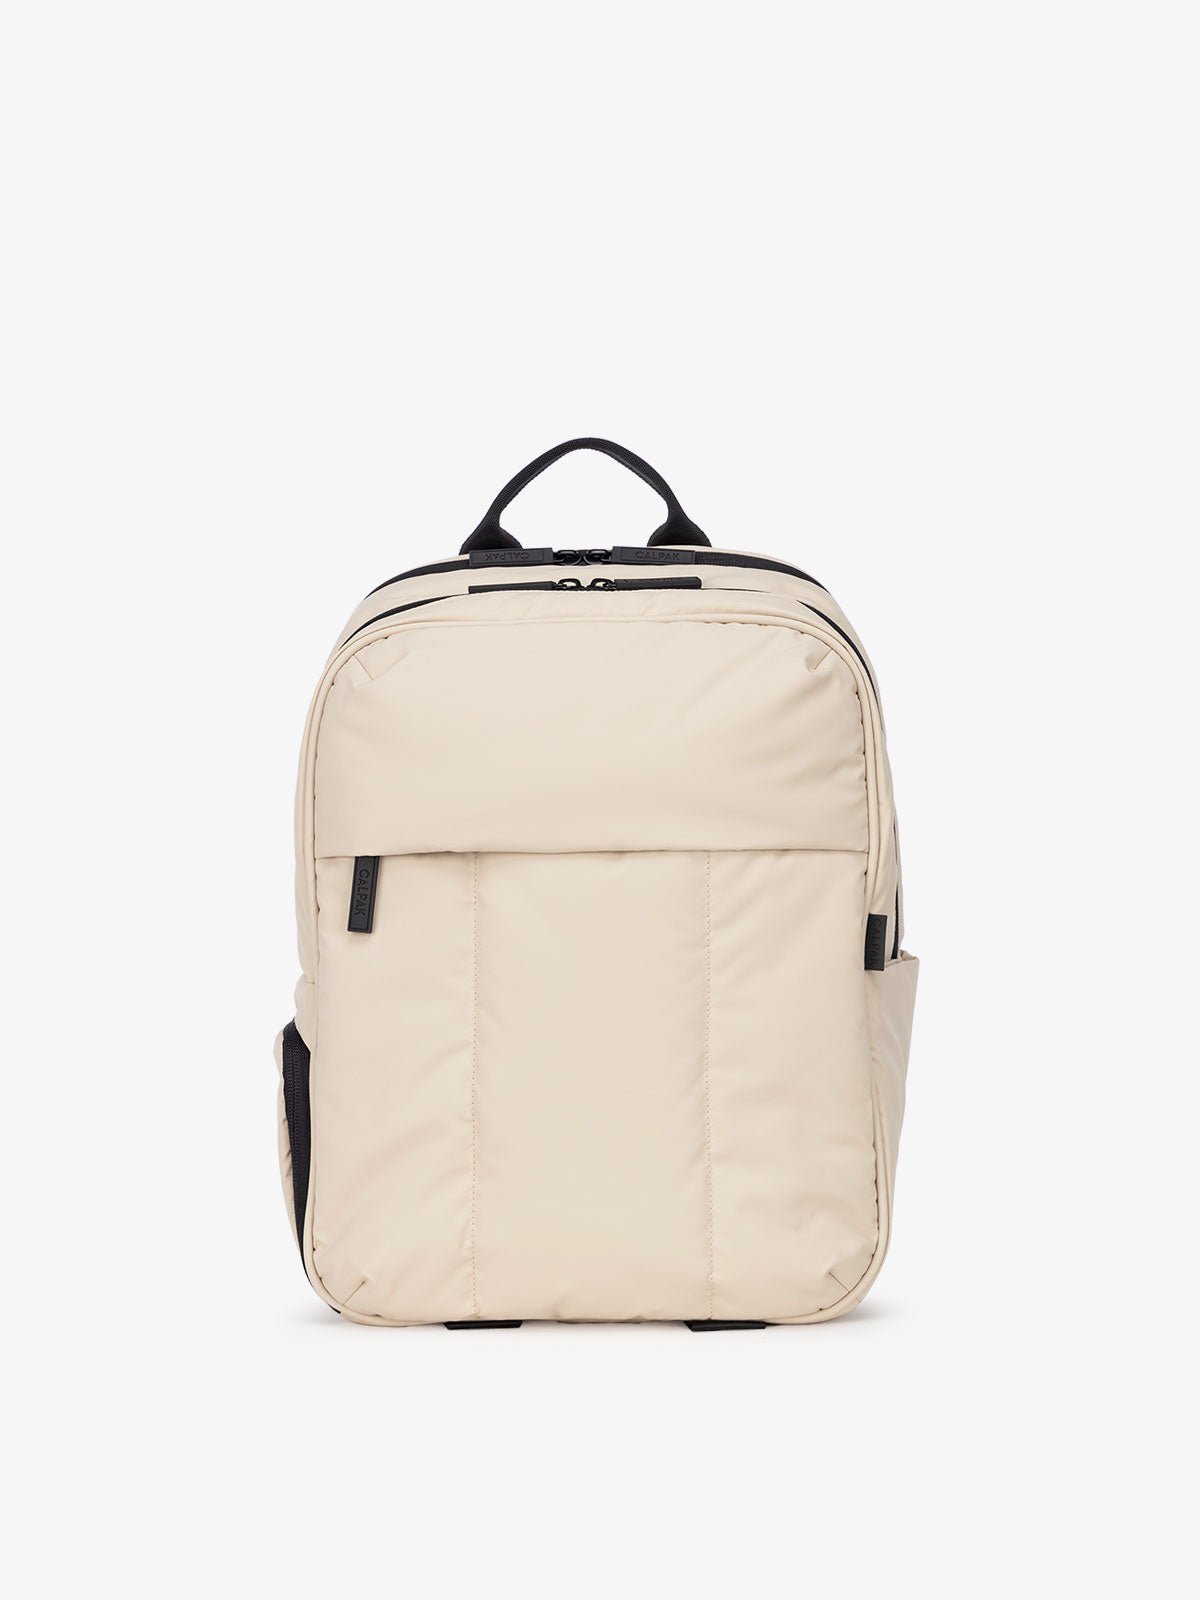 CALPAK Luka laptop backpack in cream oatmeal